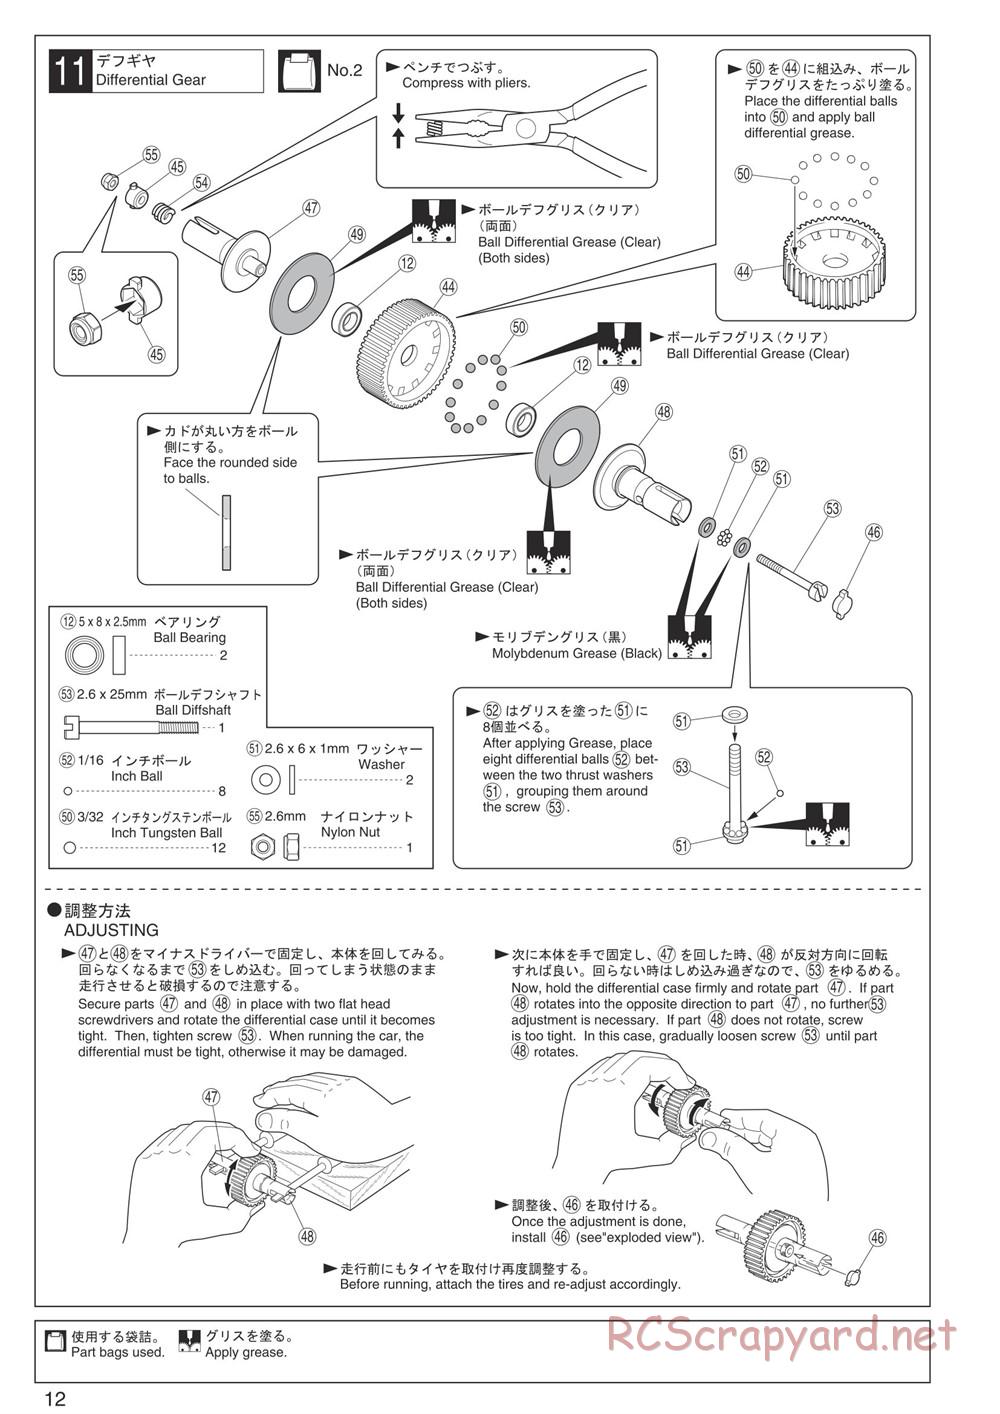 Kyosho - Ultima RT5 - Manual - Page 12